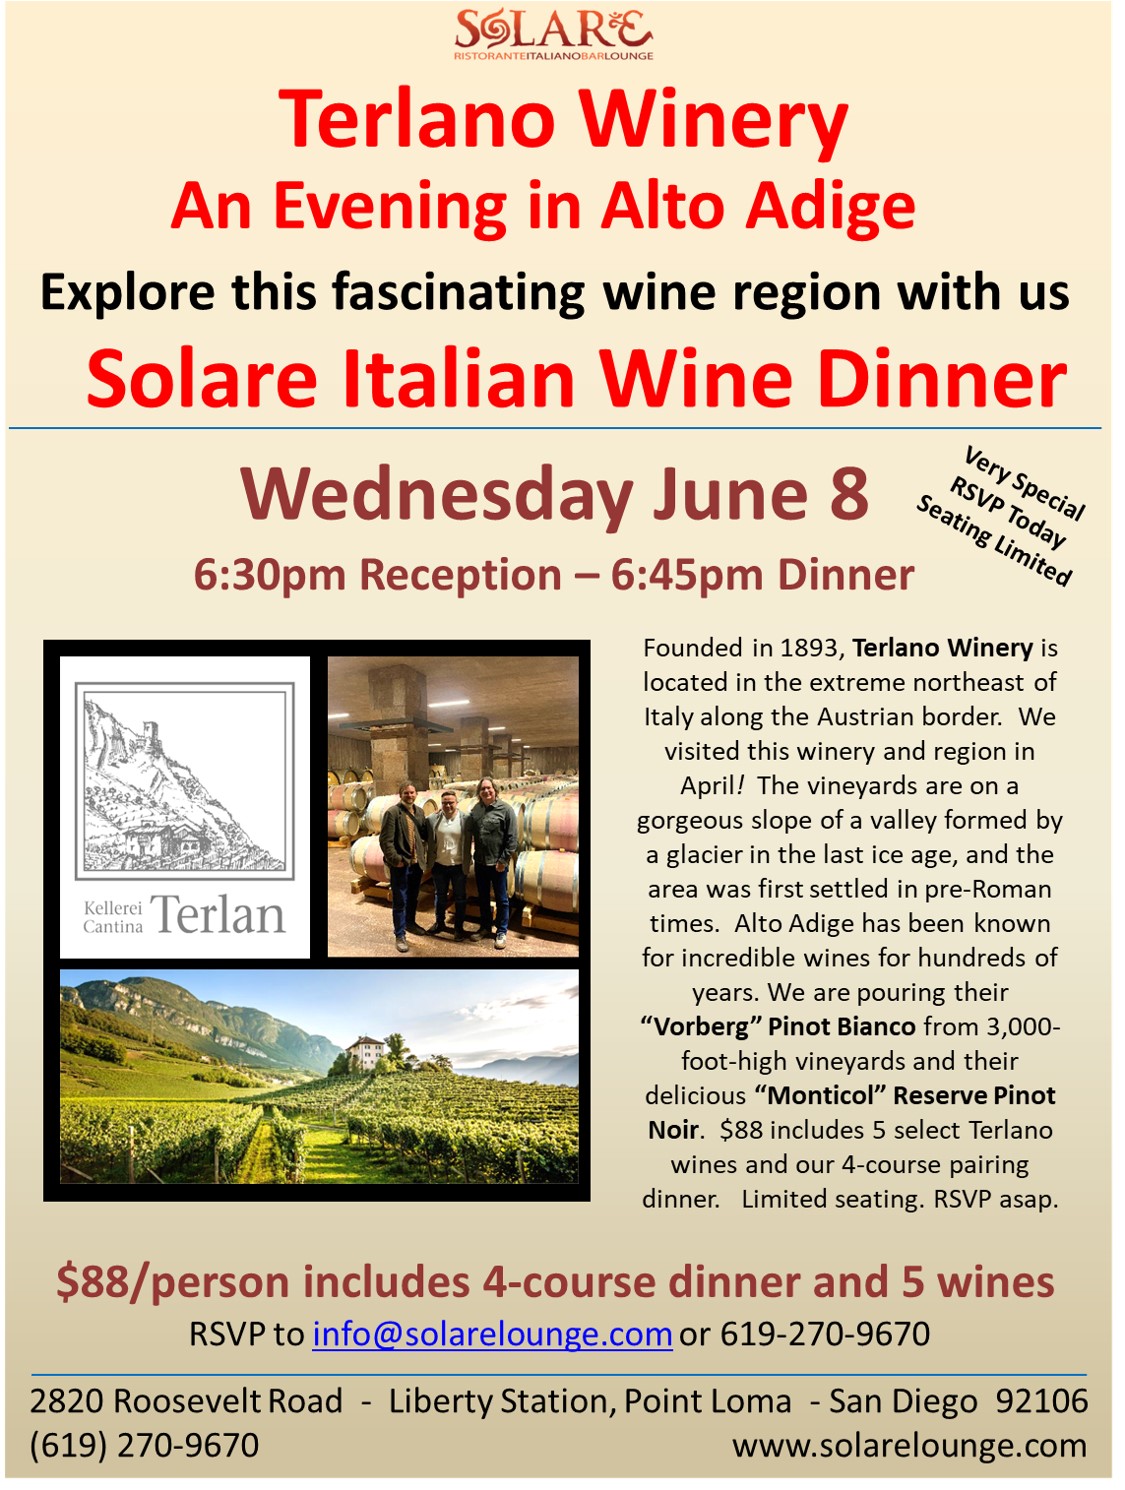 <a id="Solare-Terlano-Wine-Dinner"></a>Solare Italian Wine Dinner - "An Evening in Alto Adige"